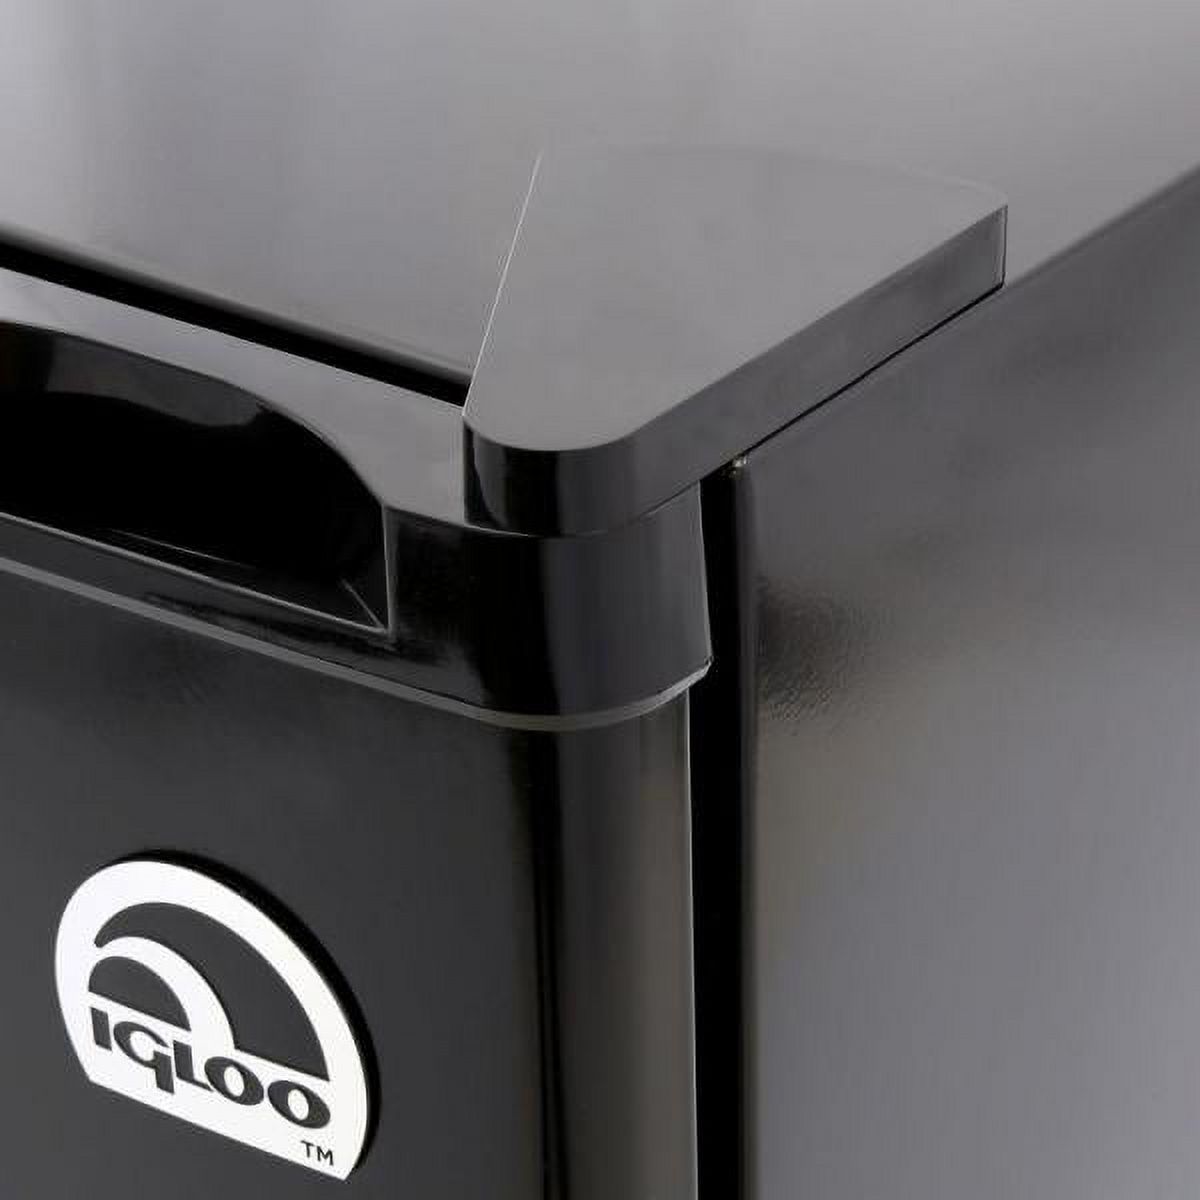 IGLOO 3.2 cu. ft. Mini Refrigerator in Black-FR320-BLACK - image 4 of 7